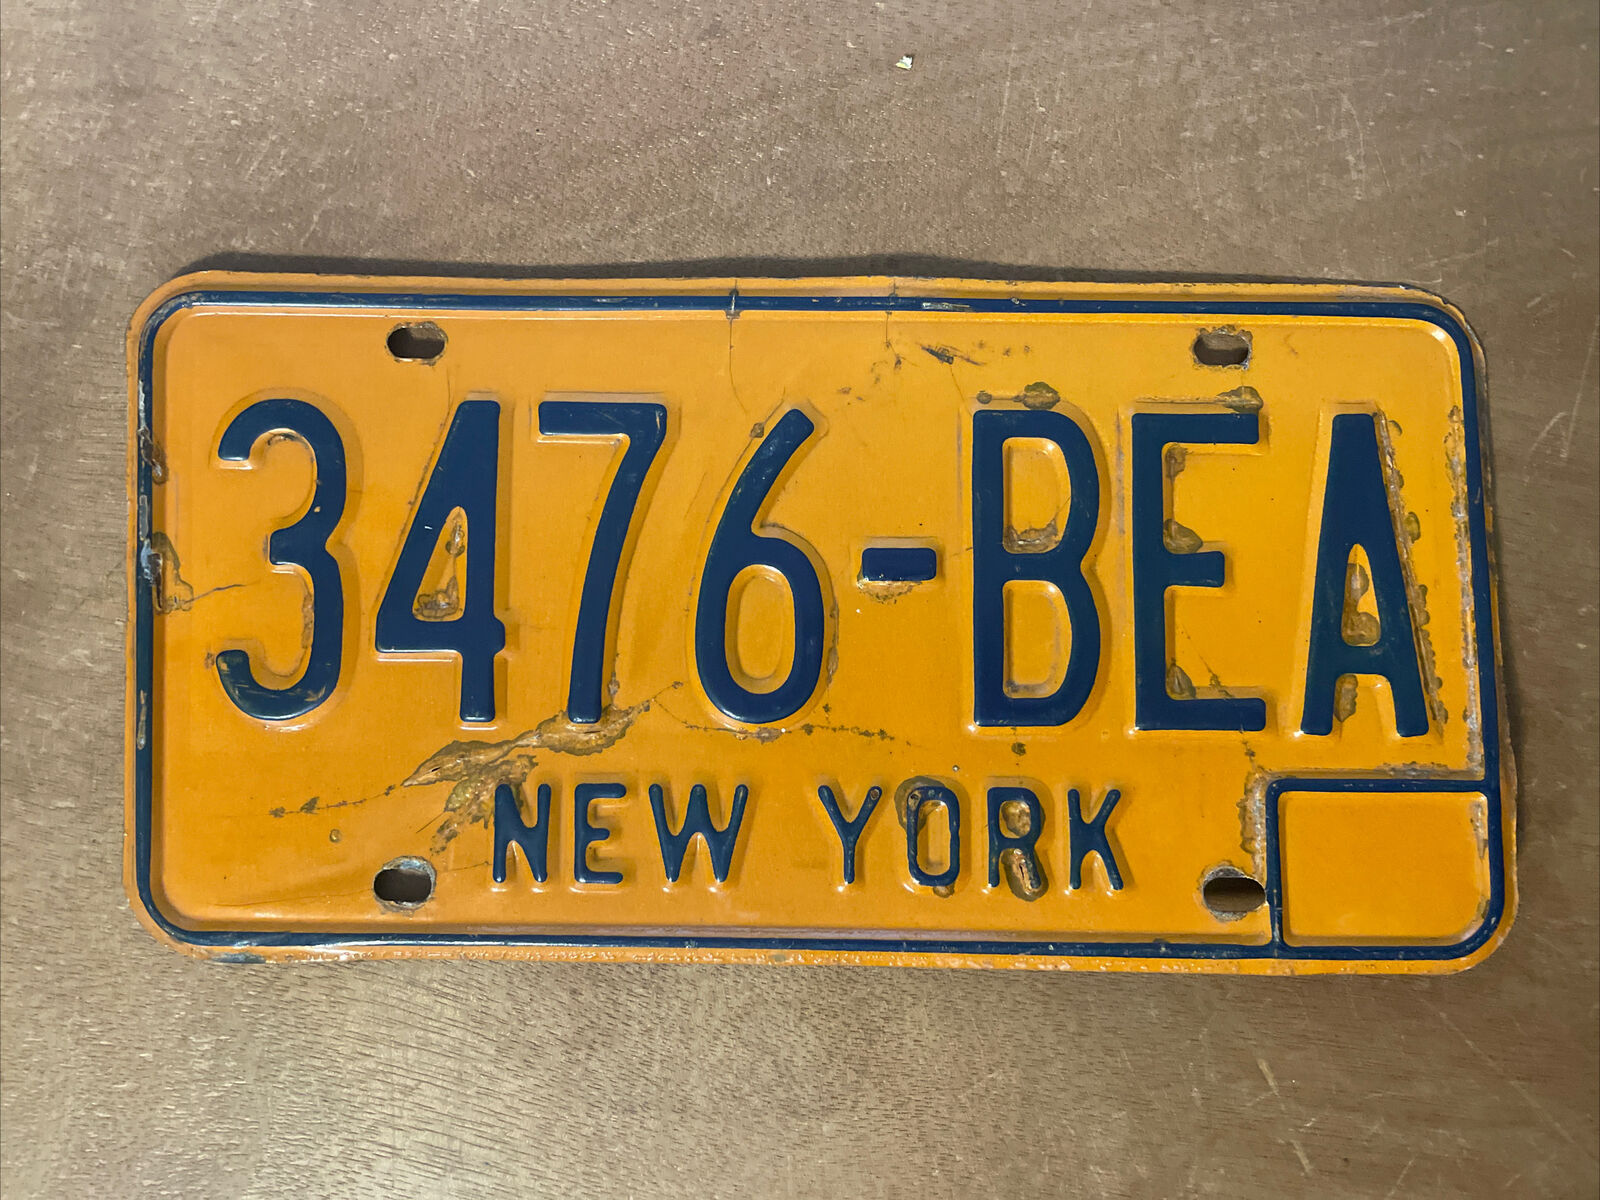 Odio fractura Exceder 1980 New York License Plate # 3476- BEA | eBay